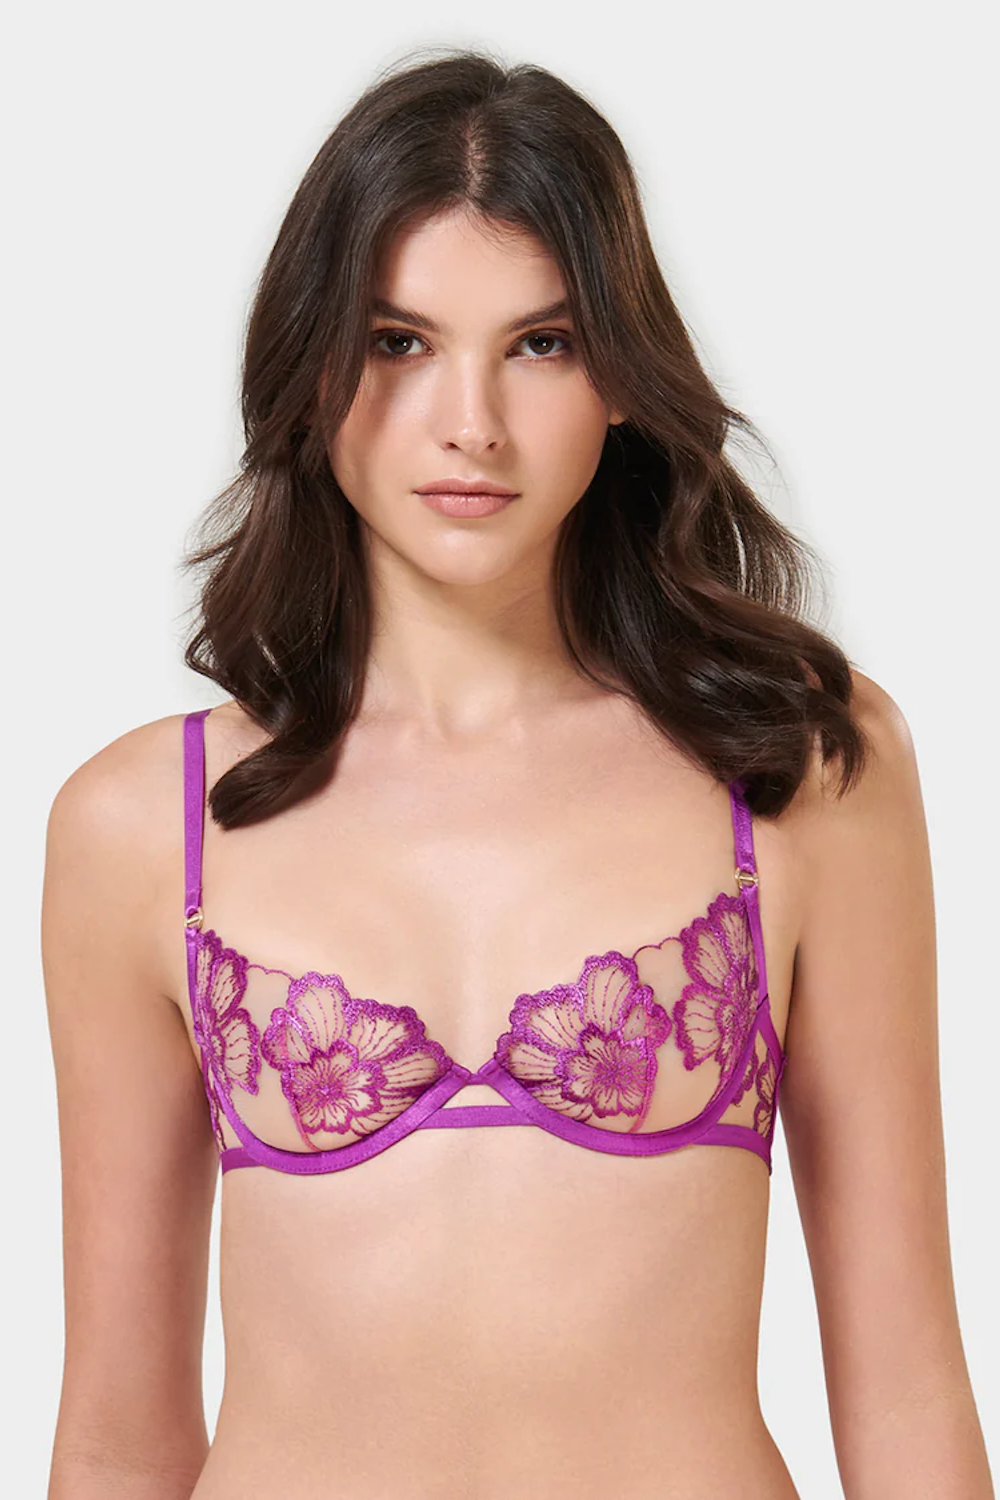 Catalina Wired Bra Bright Violet/Sheer